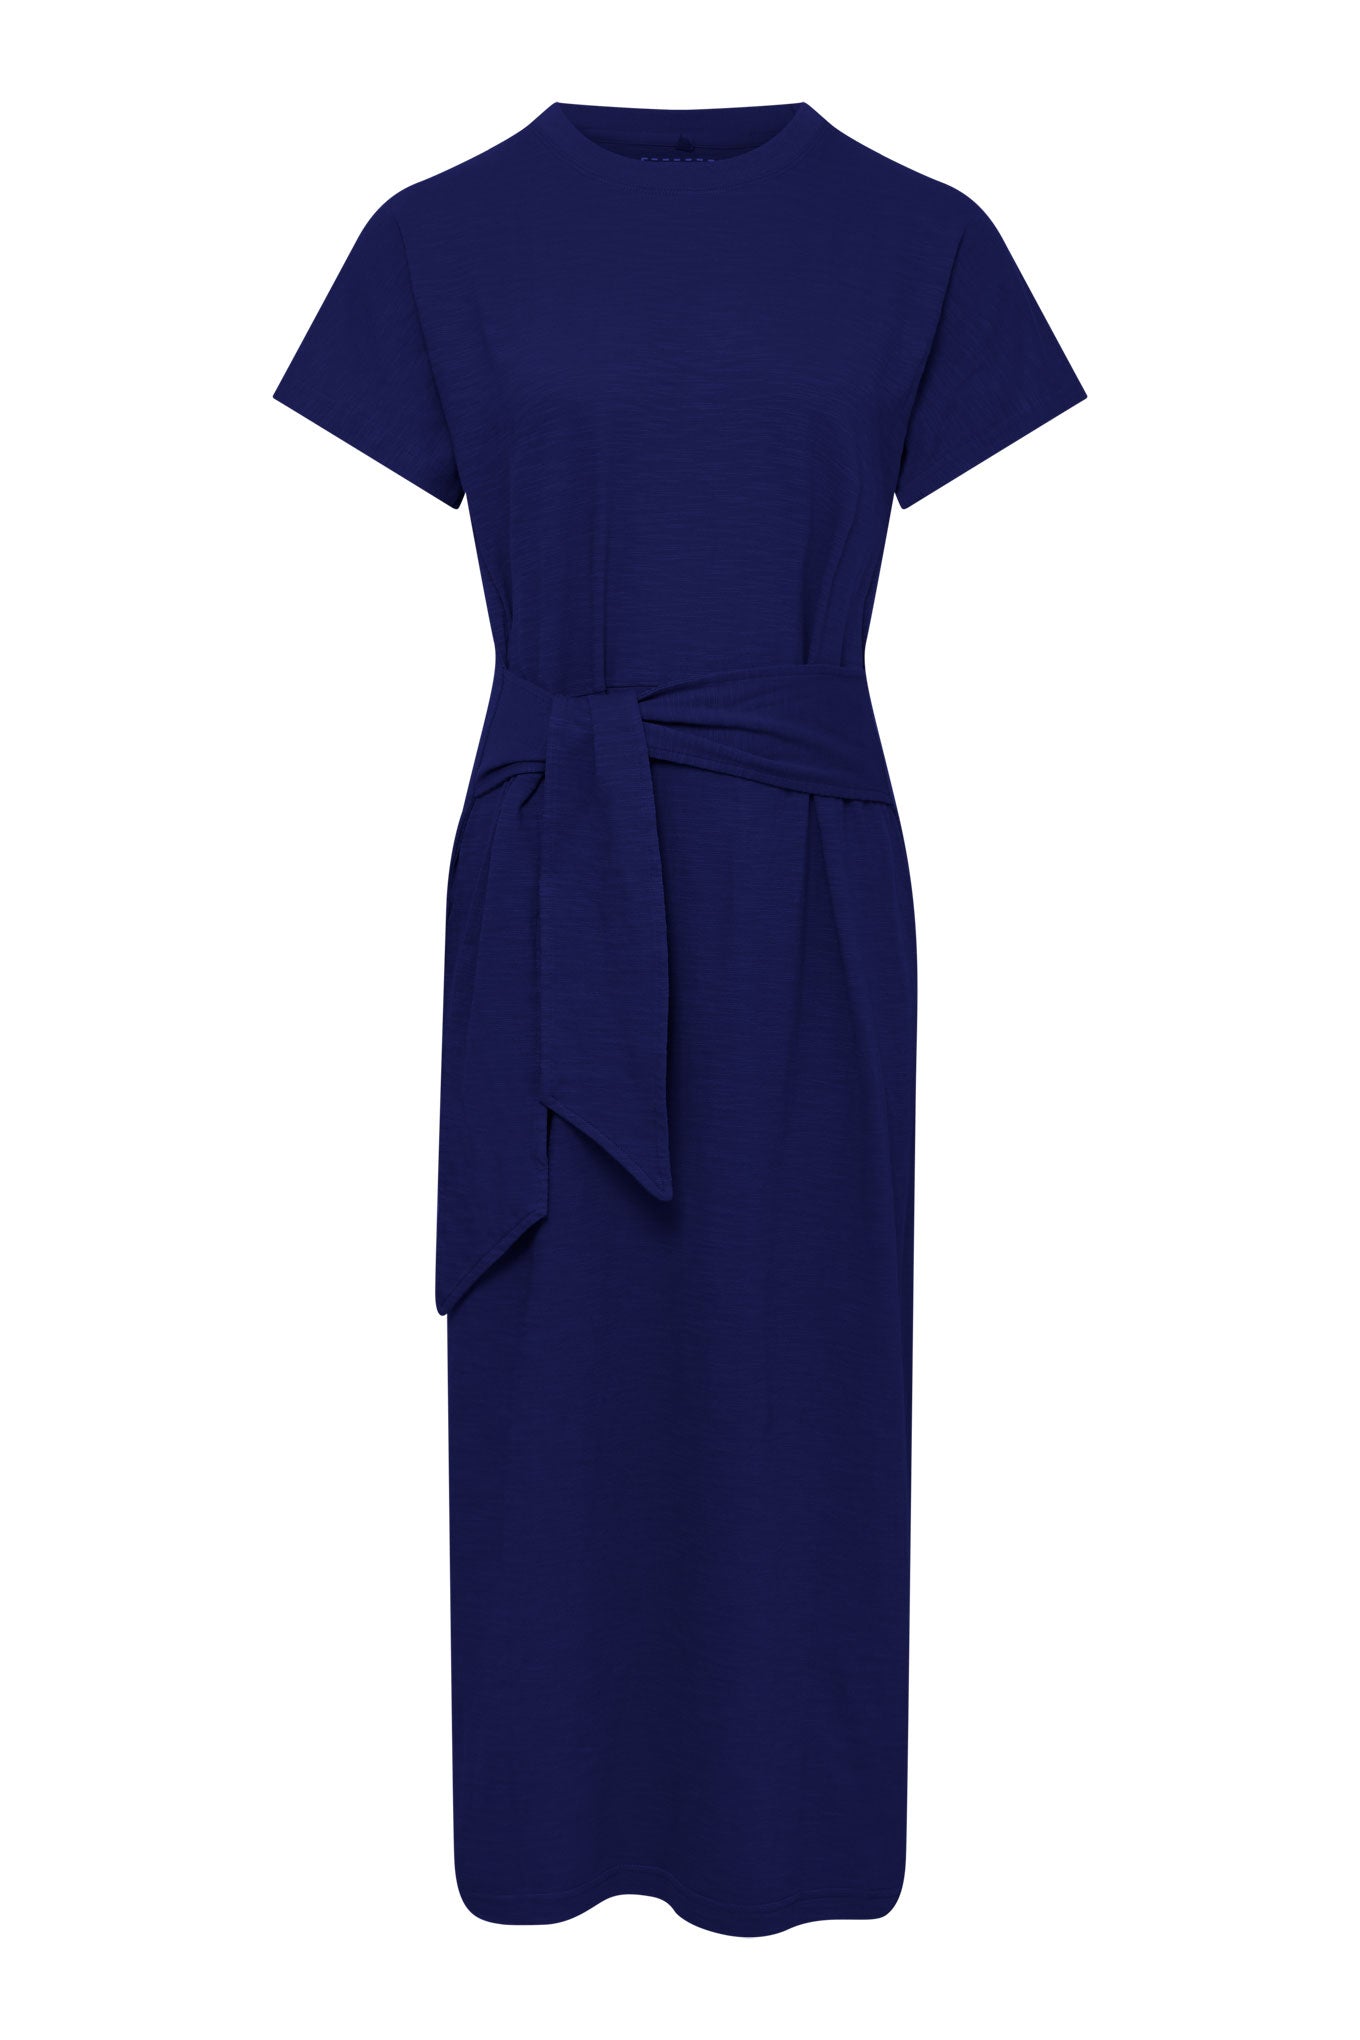 Shop Komodo Women's Blue Fonda - Gots Organic Cotton Dress Navy